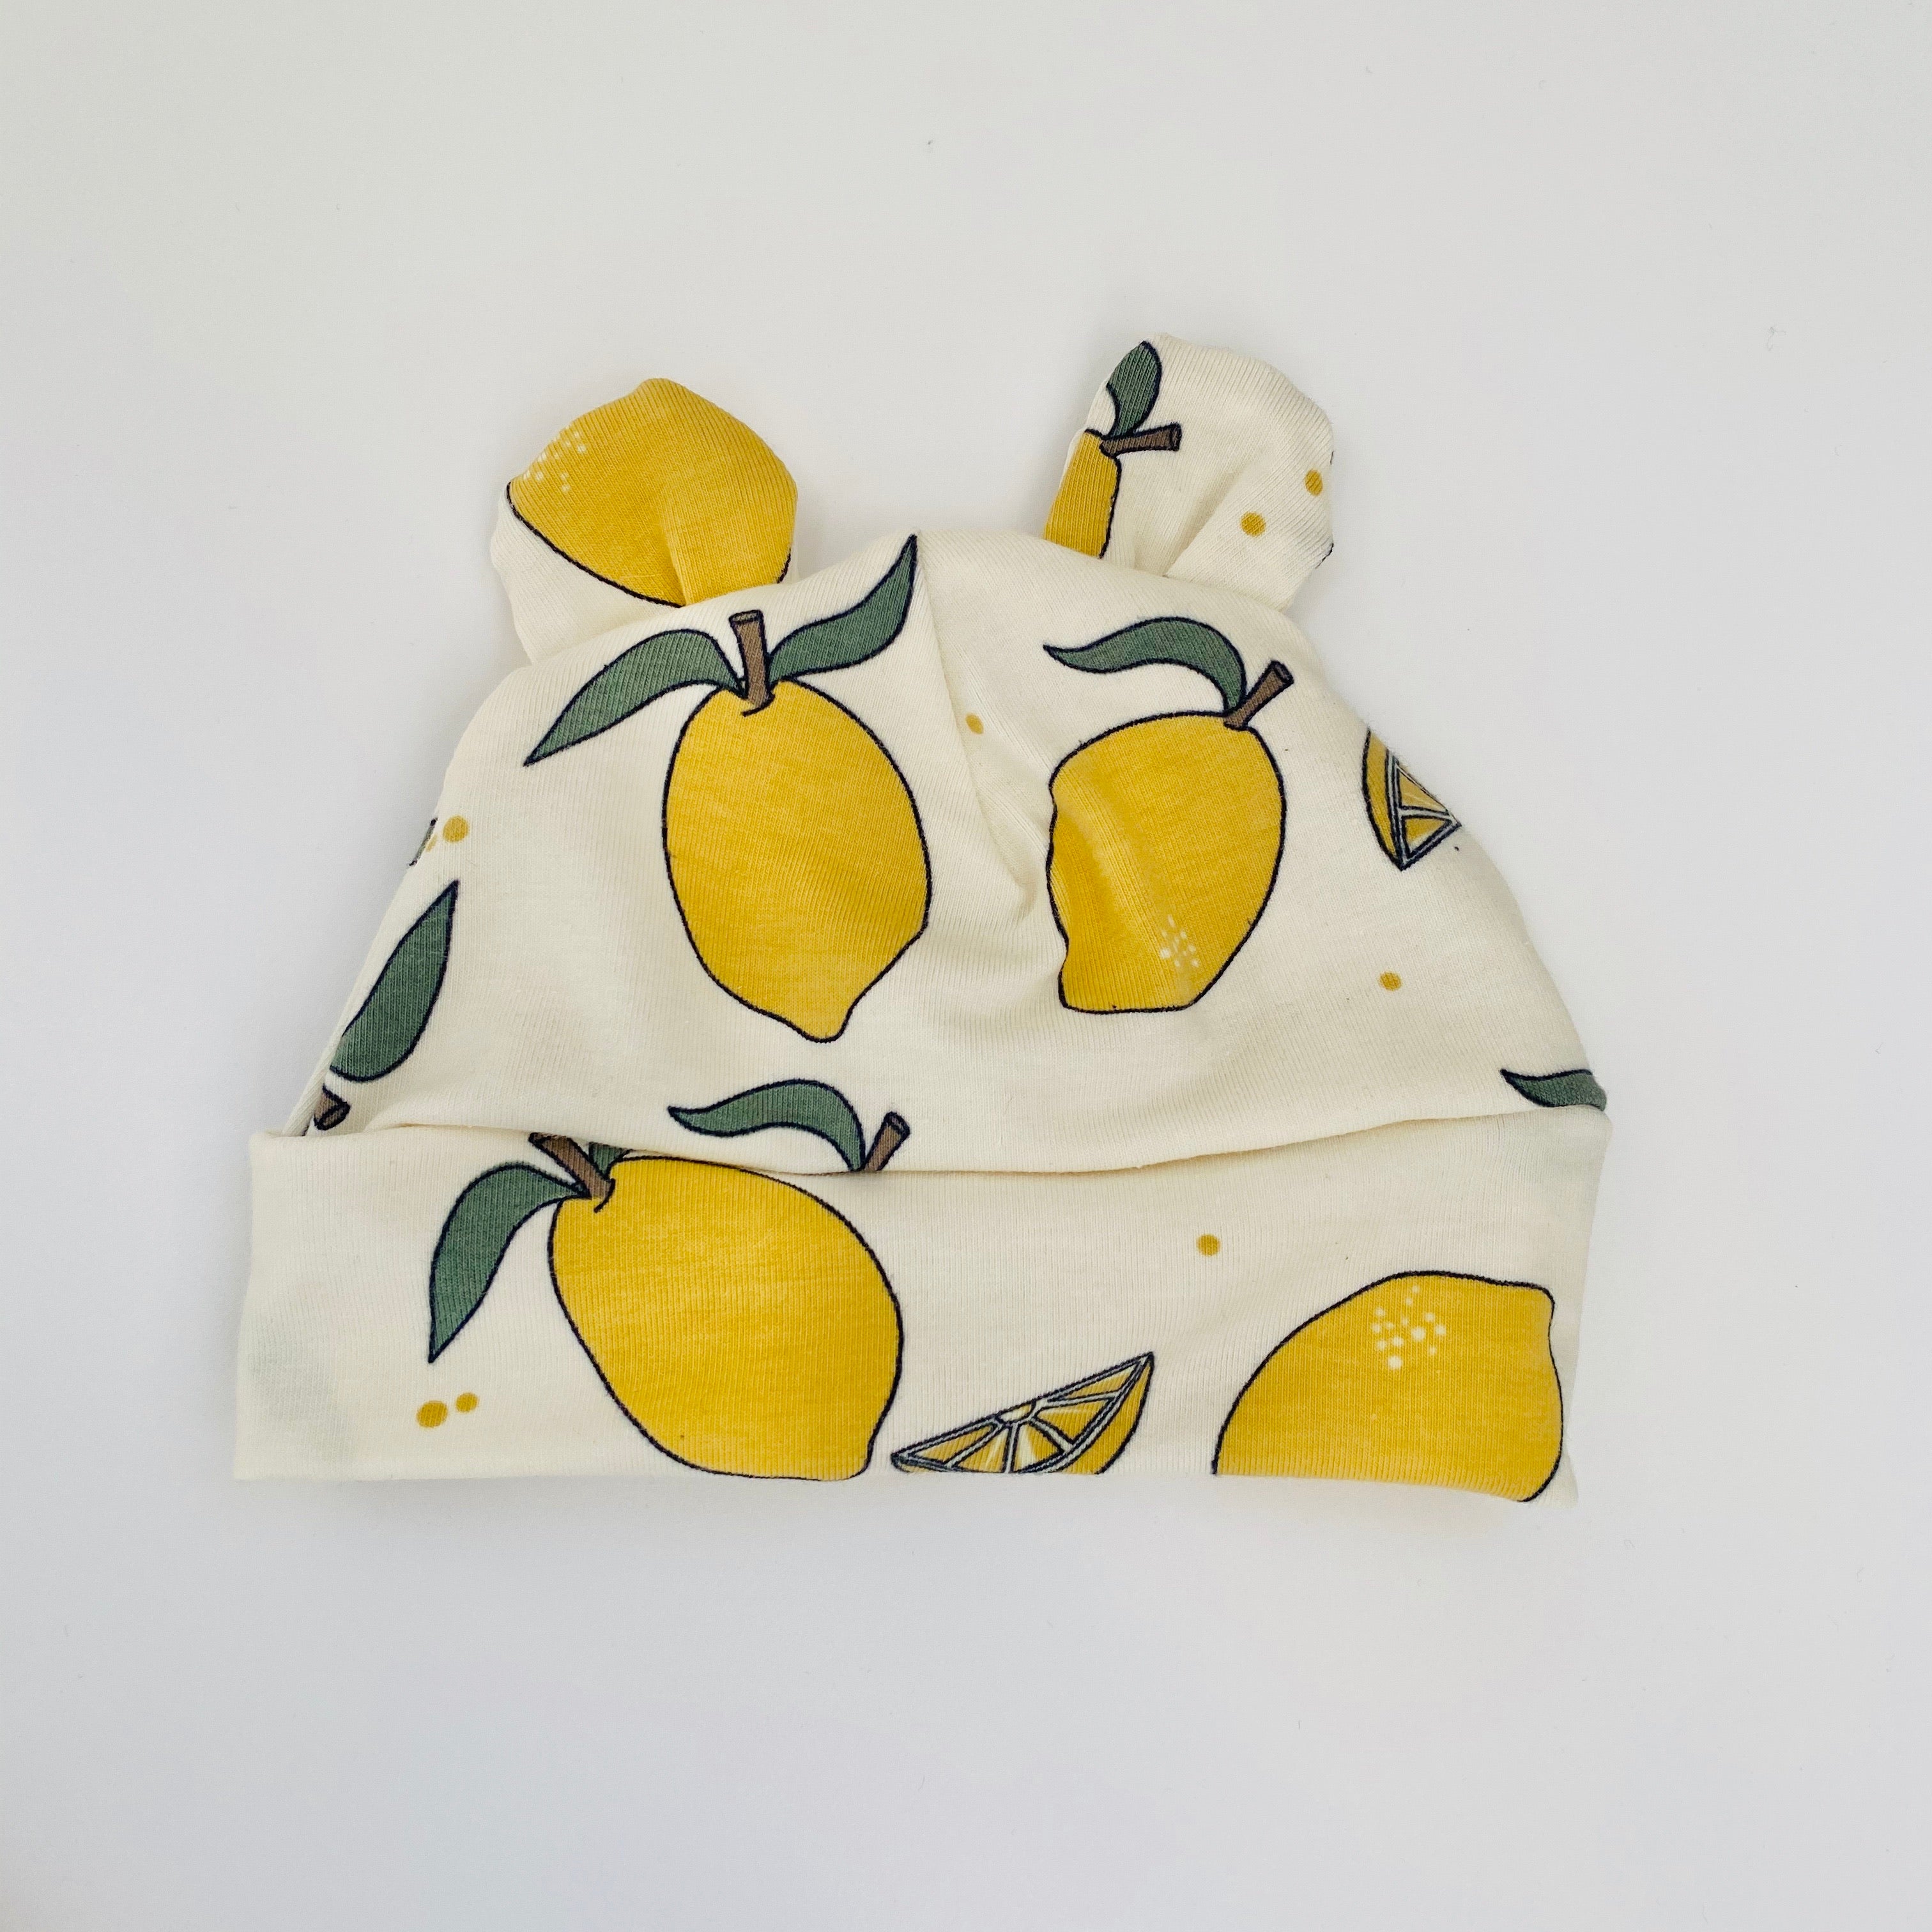 Eddie & Bee organic cotton Baby hat with ears  in Cream " Lemon Grove” print.